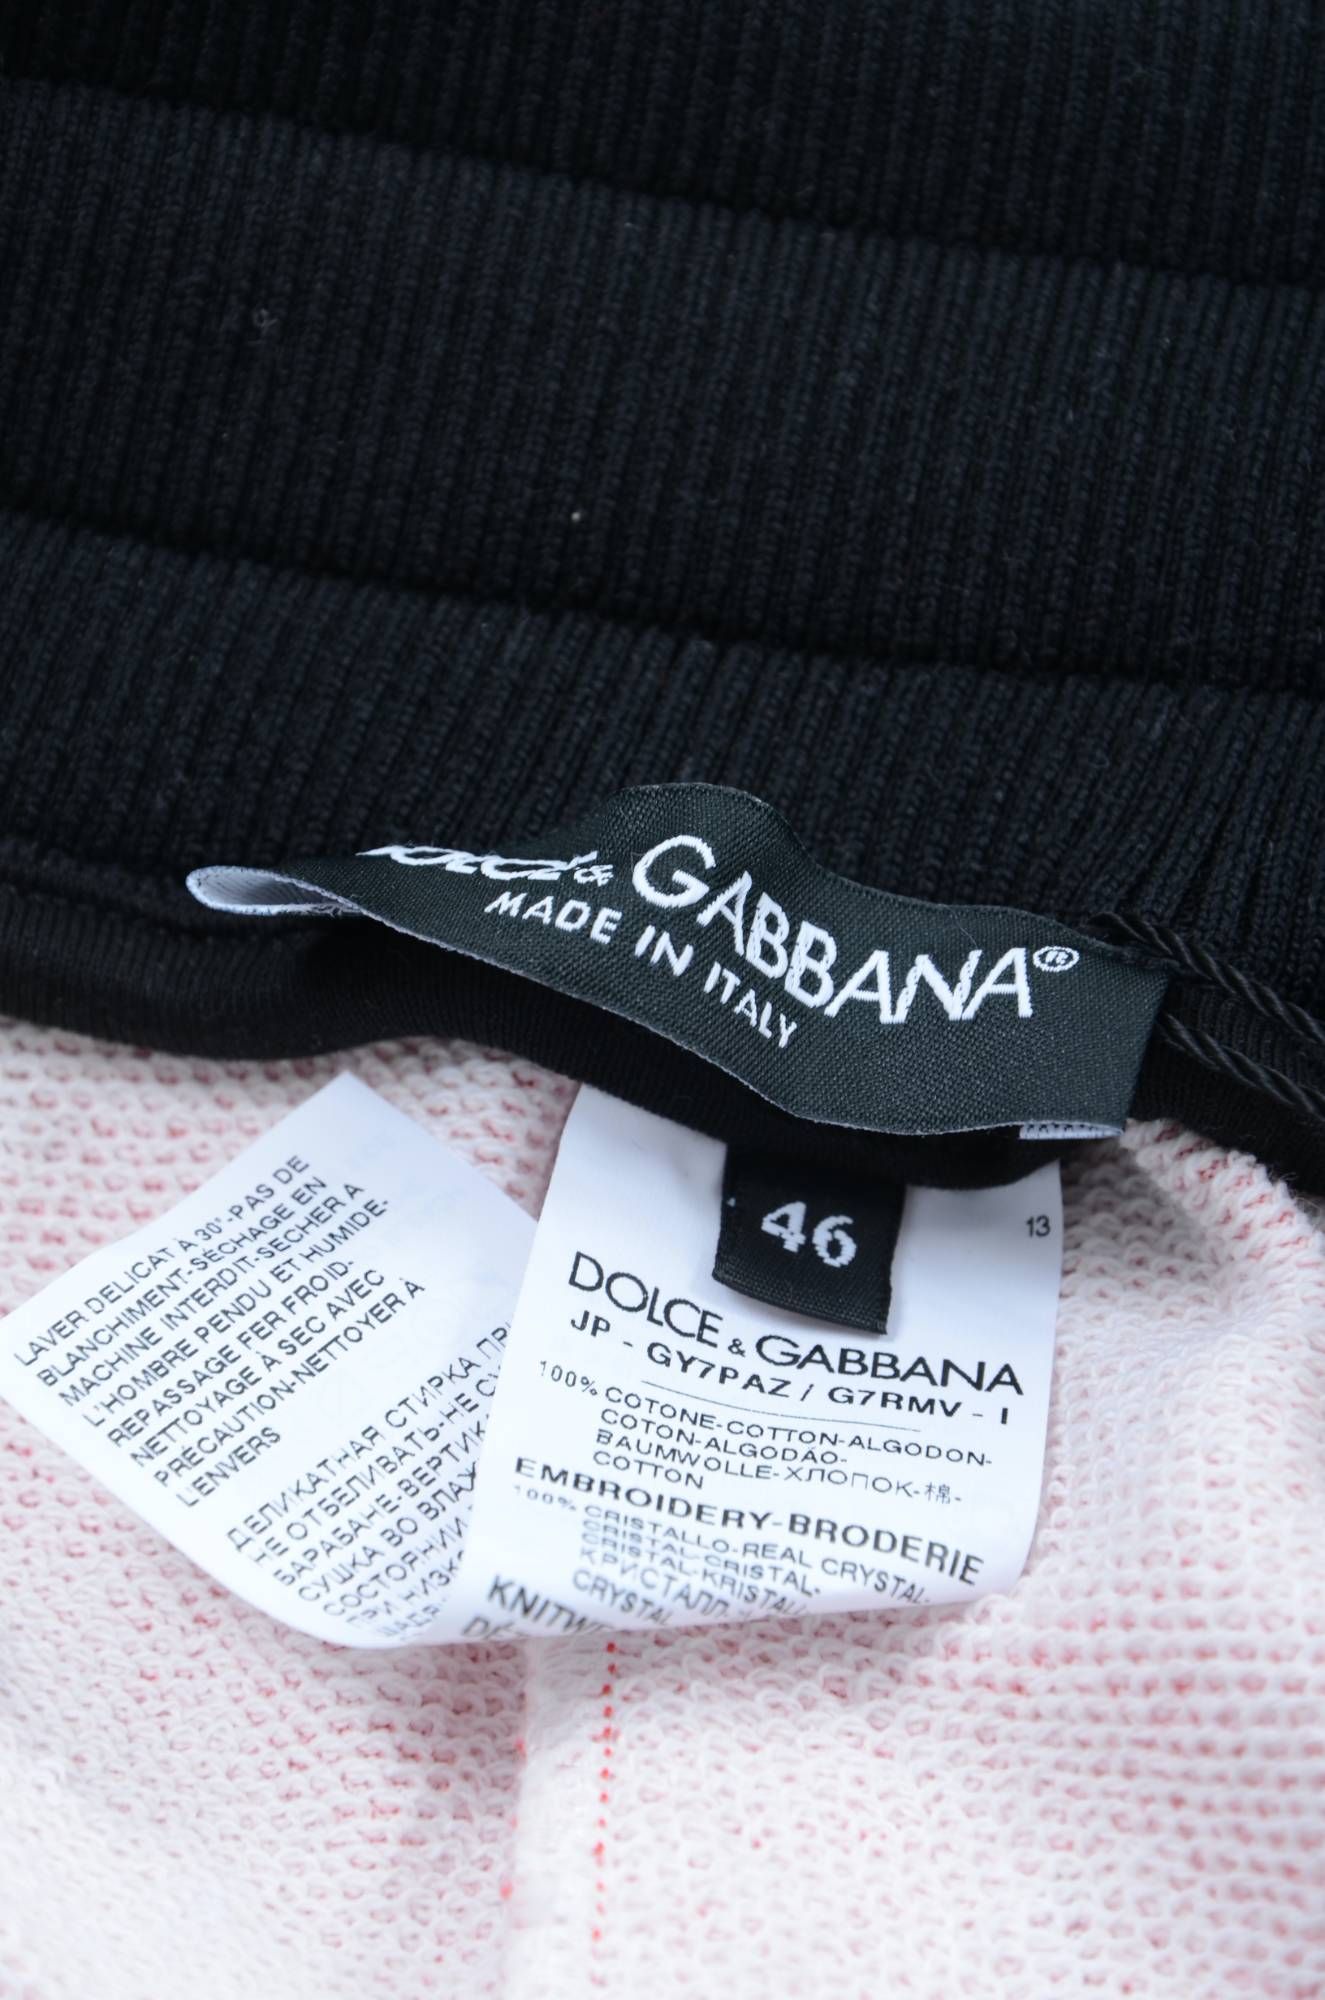 Dolce & Gabbana Men Sport Trousers
Jewels Aplications
Print Pig Piggy Bank